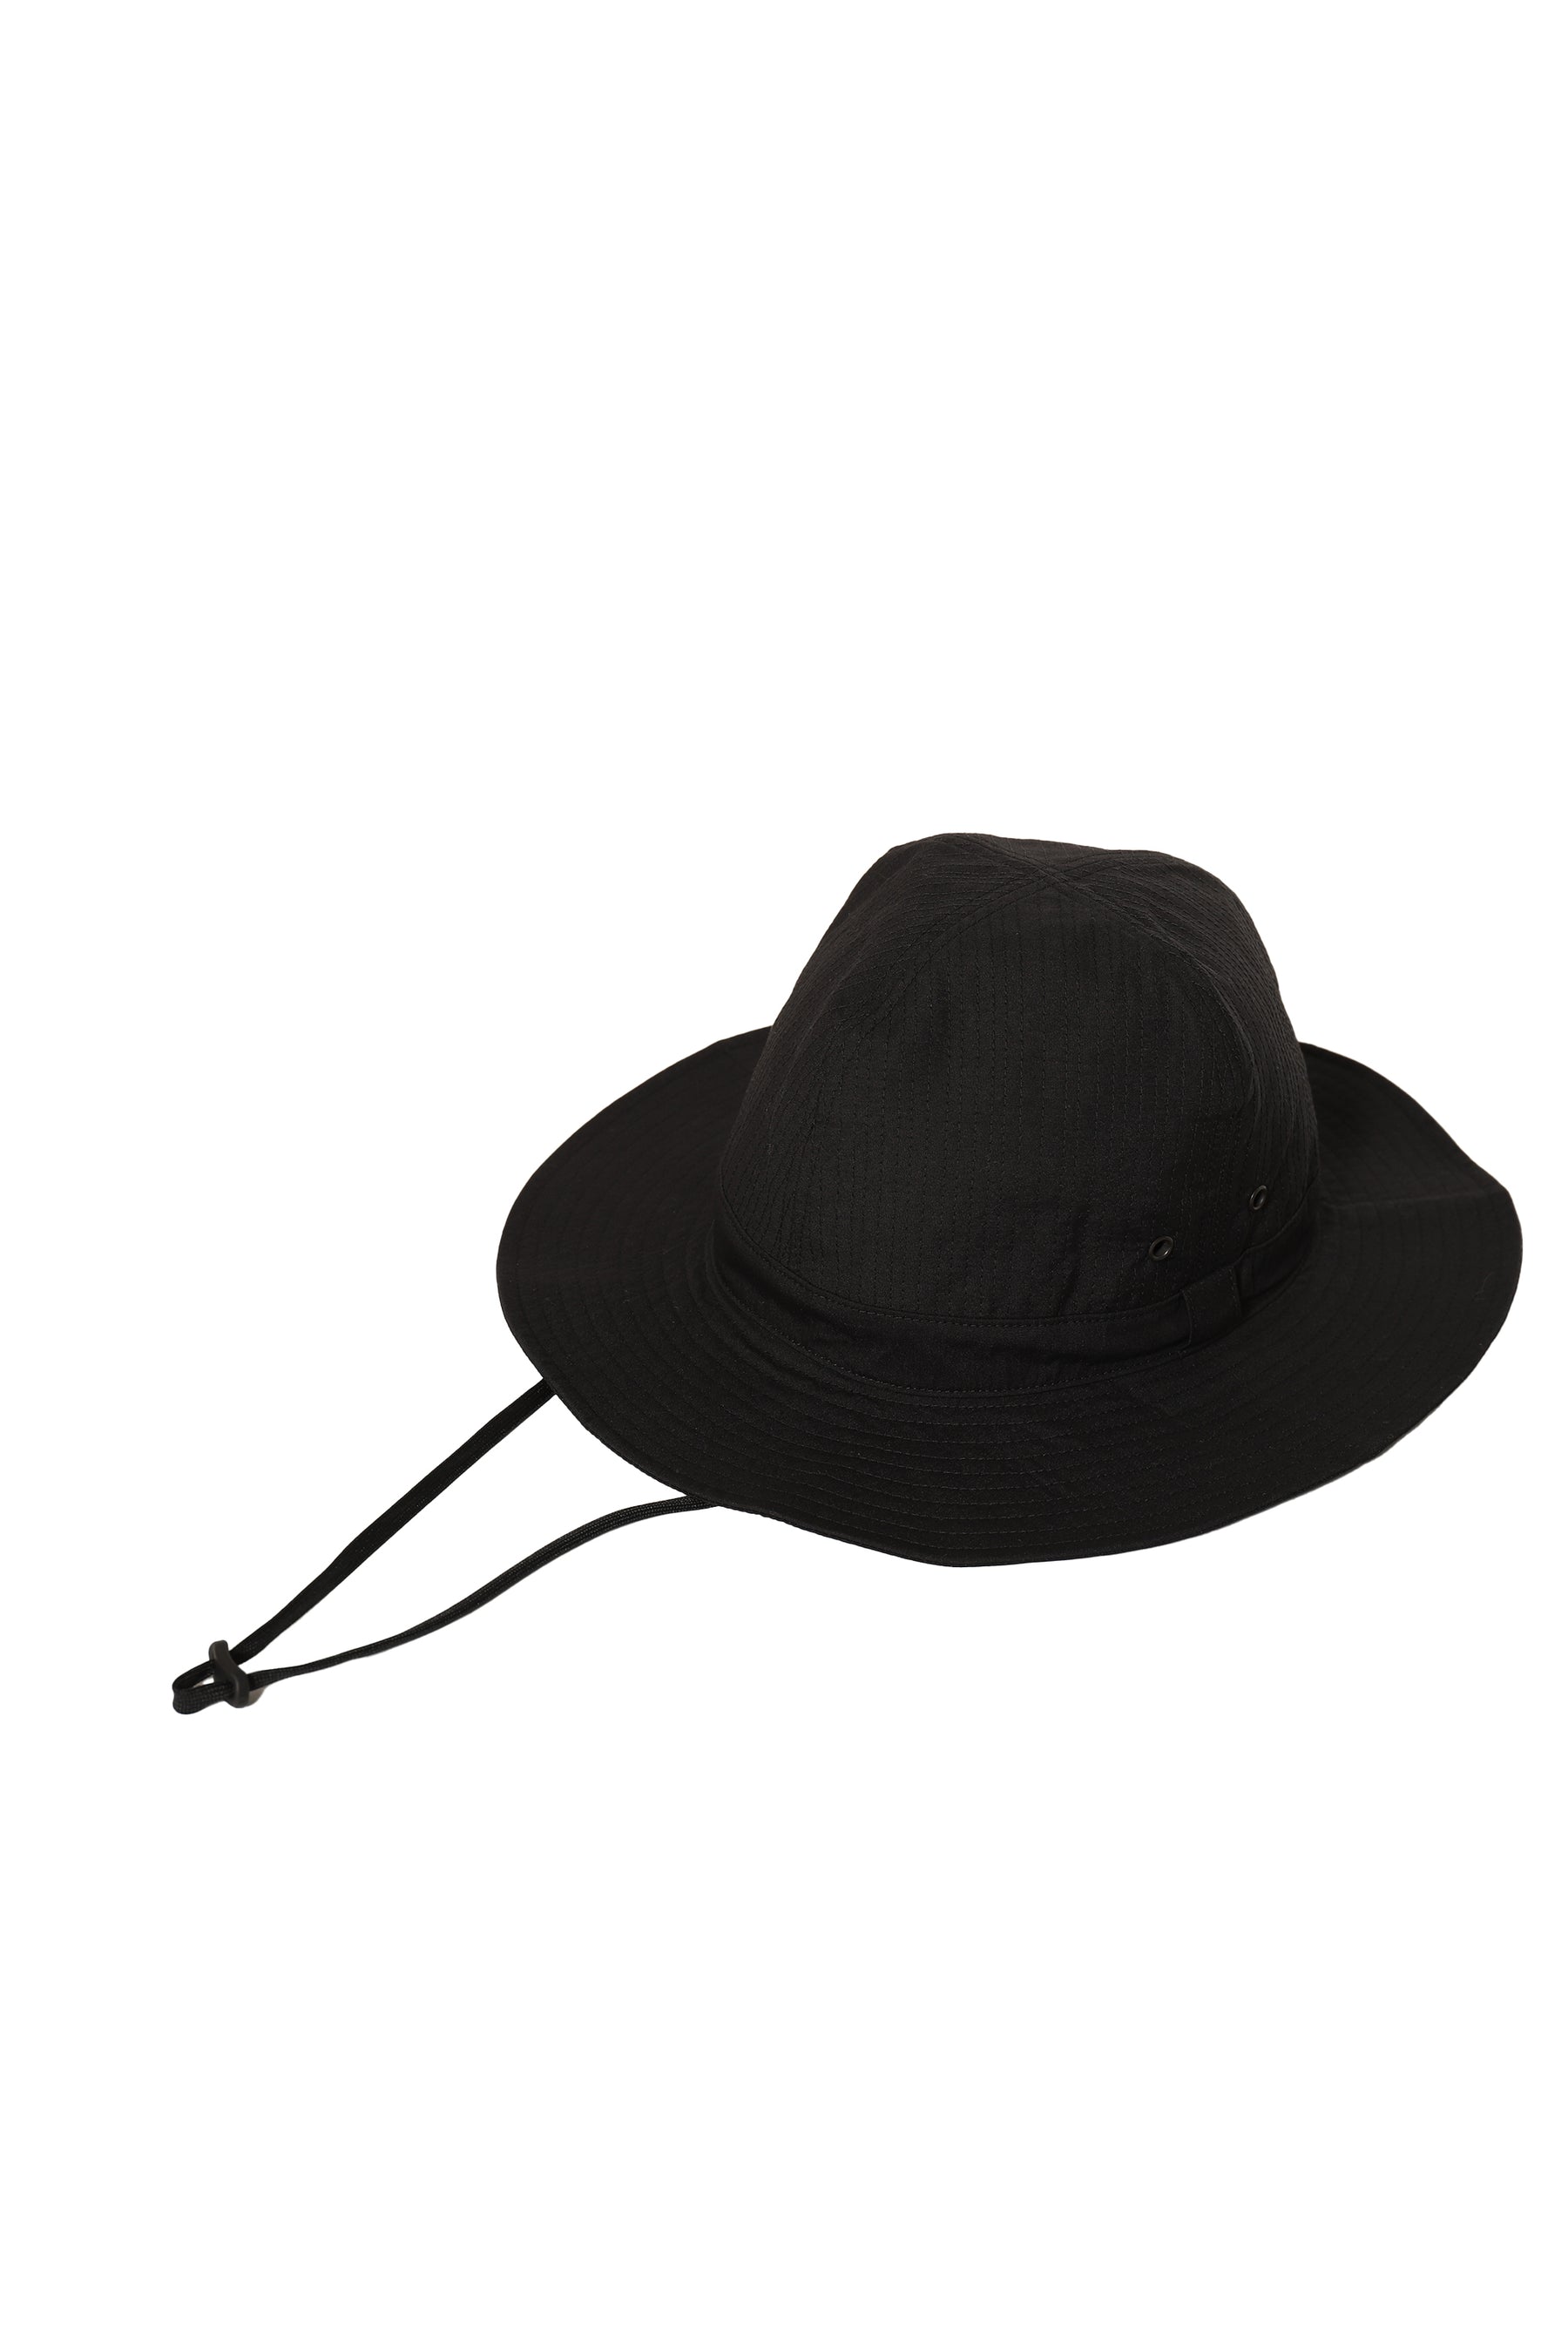 CRUSHER HAT - C/N OXFORD CLOTH / BLK